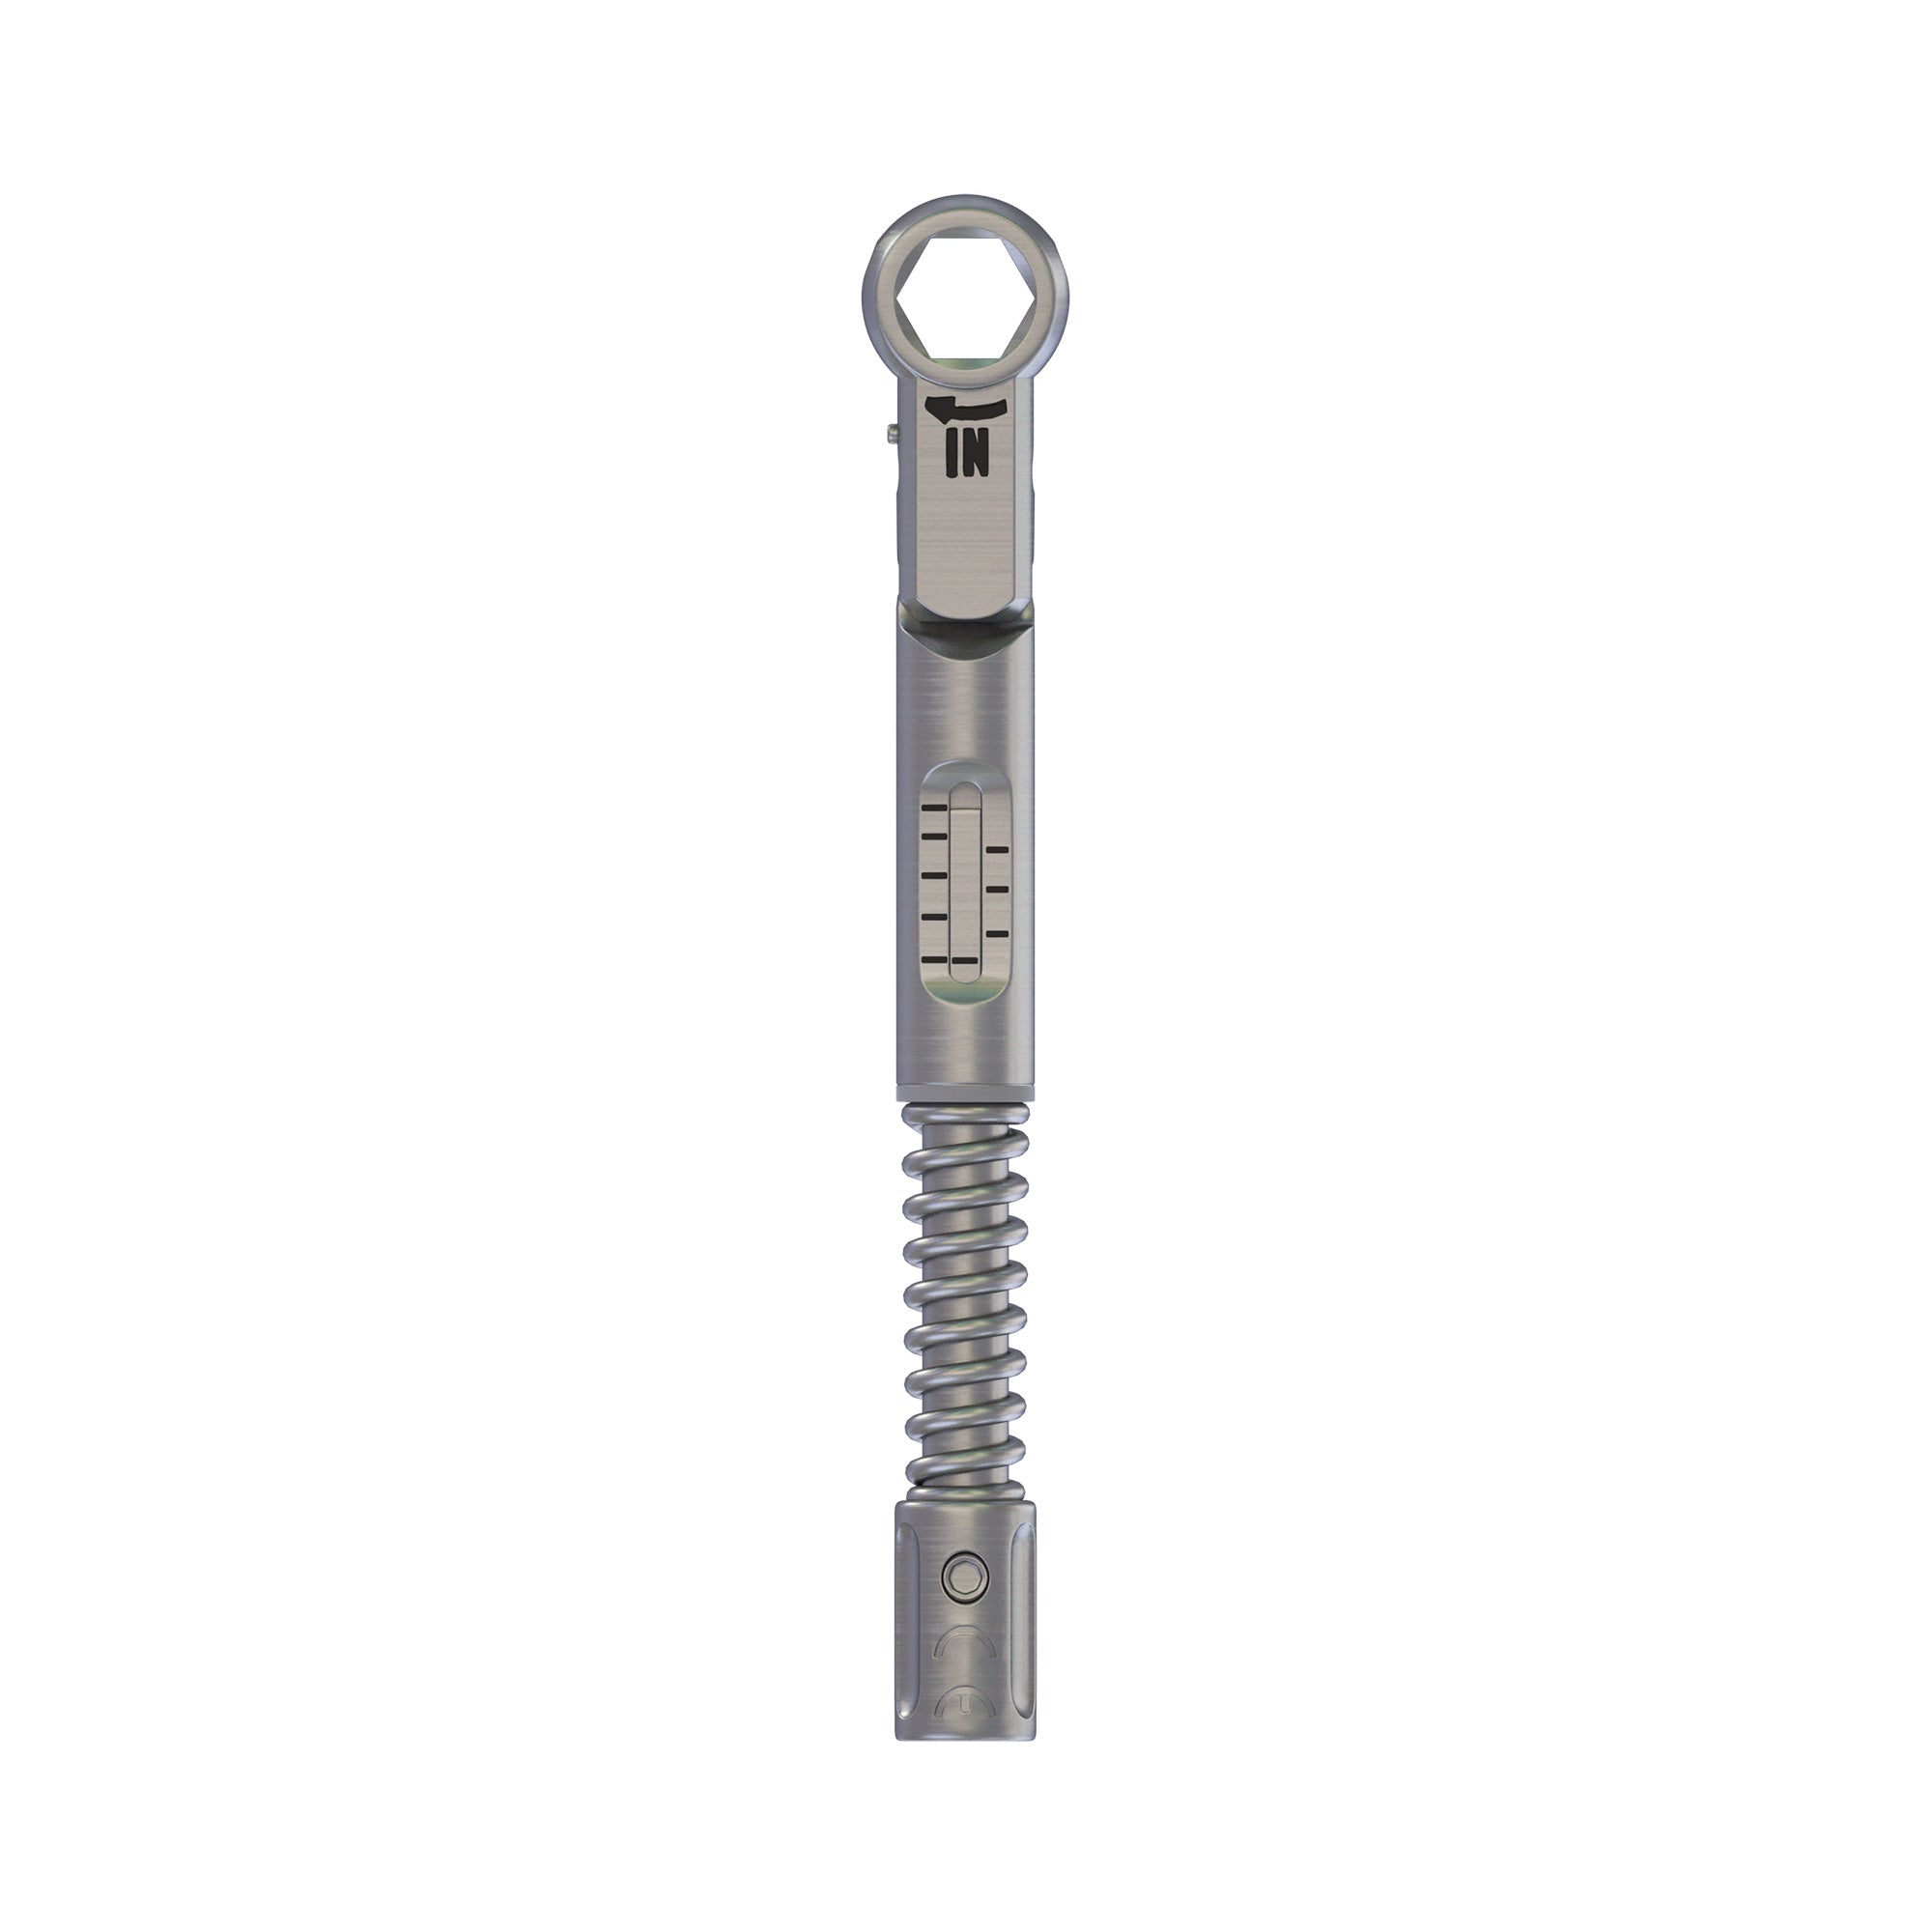 DSI Torque Ratchet Wrench 10-35/45Ncm - Hexagonal Head Connection Ø6.35mm